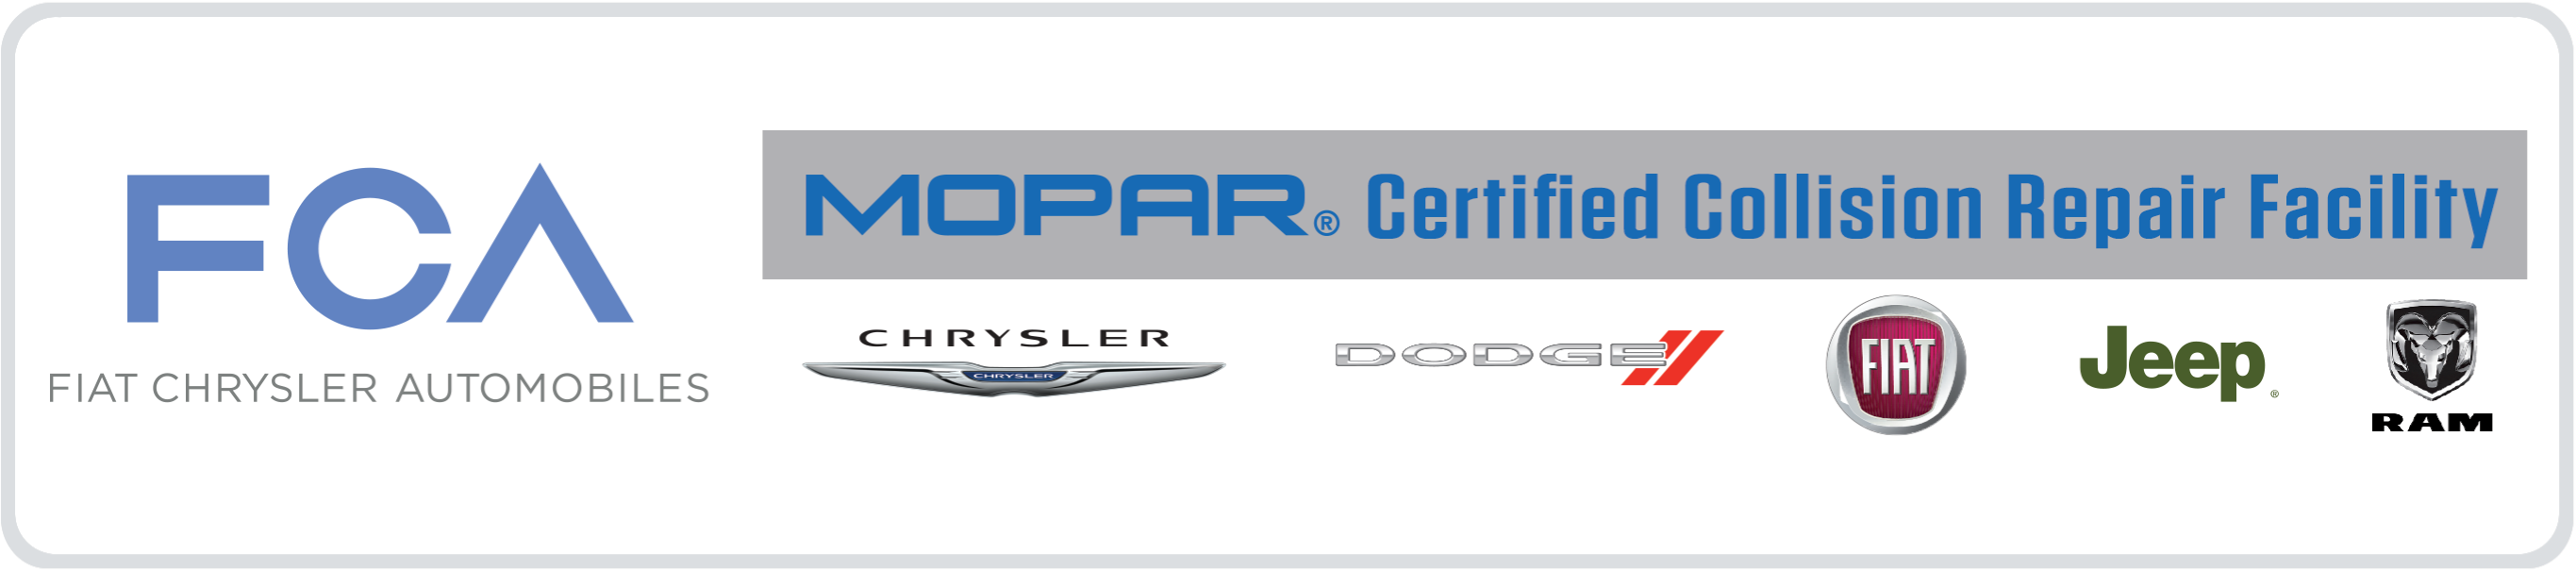 Fiat Chrysler Auto Certified